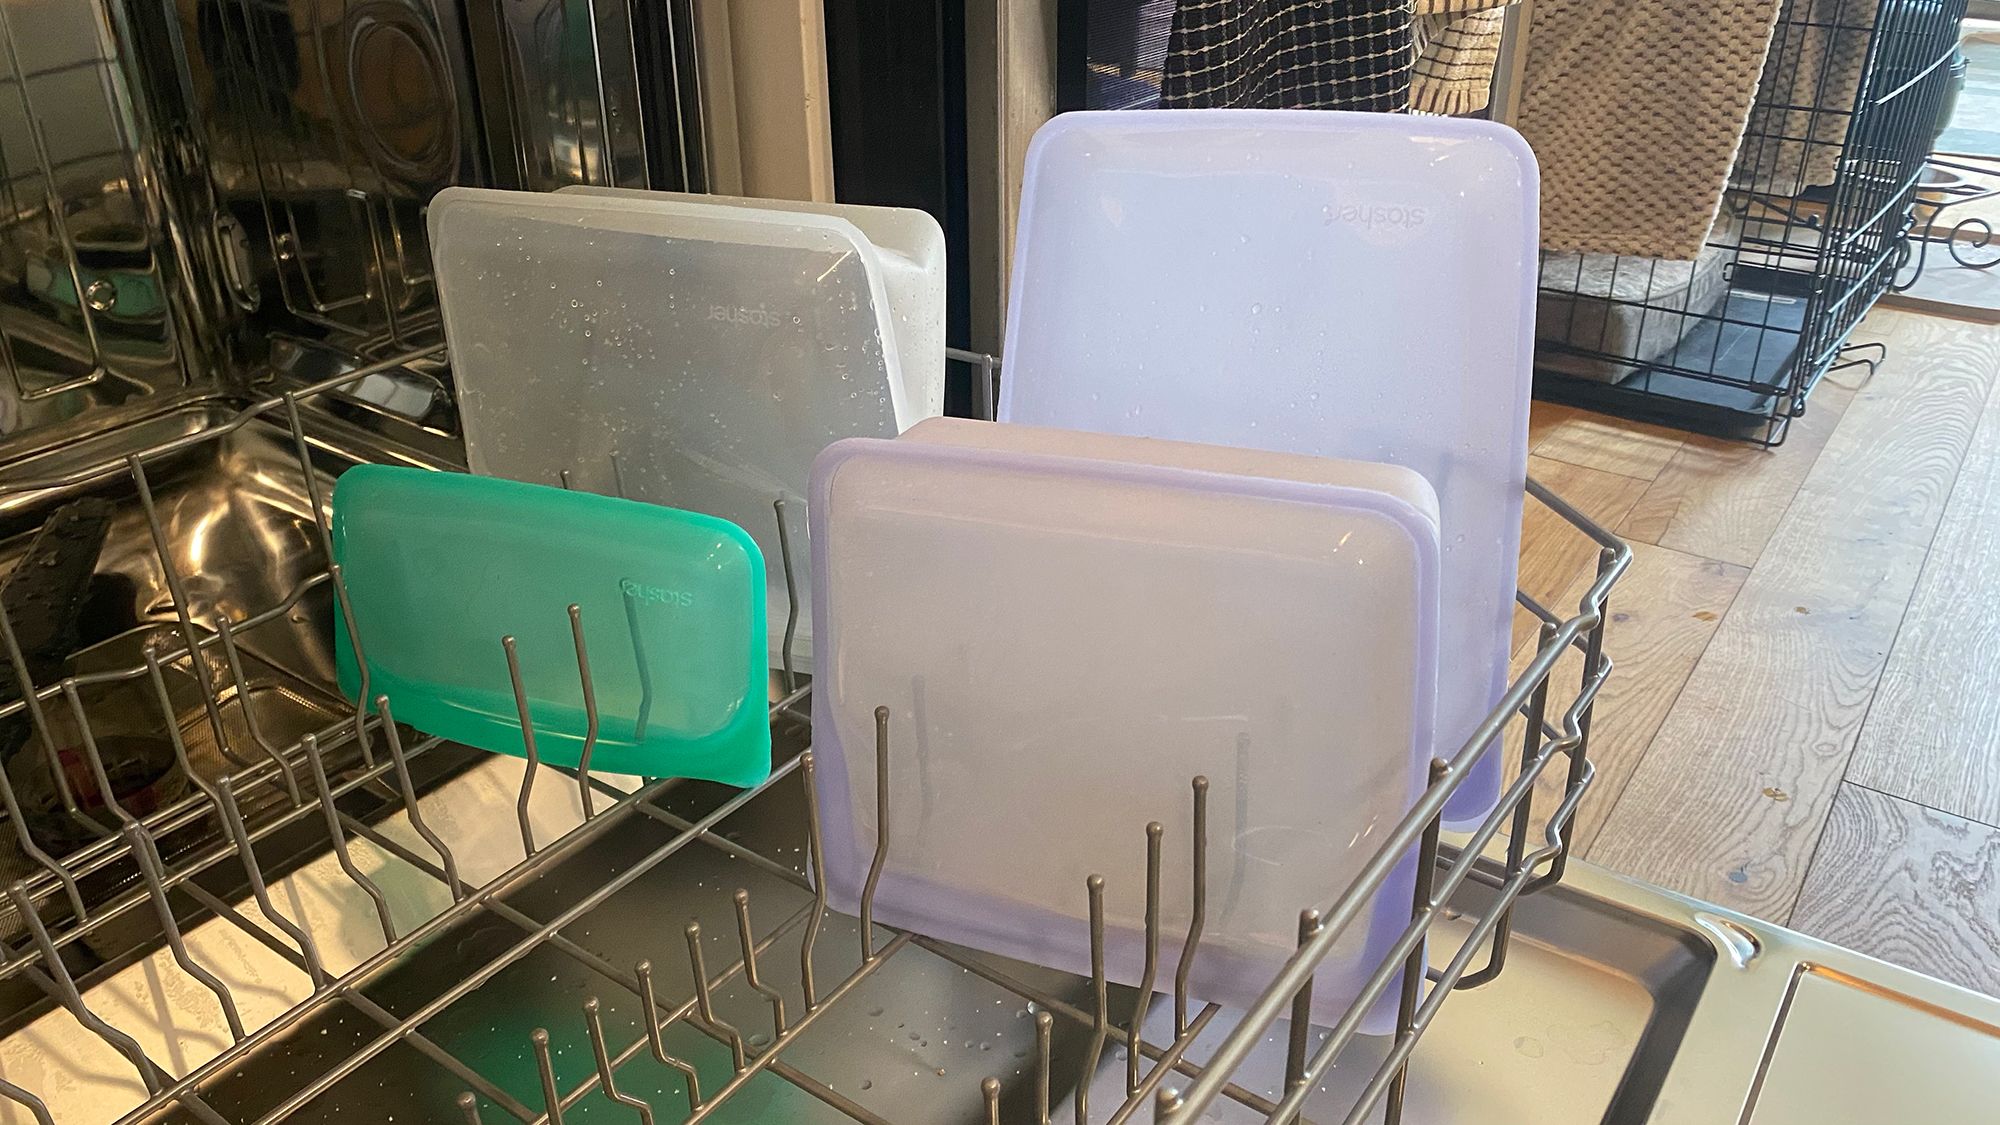 Stasher Bags Help Me Banish Single-Use Plastics from My Kitchen